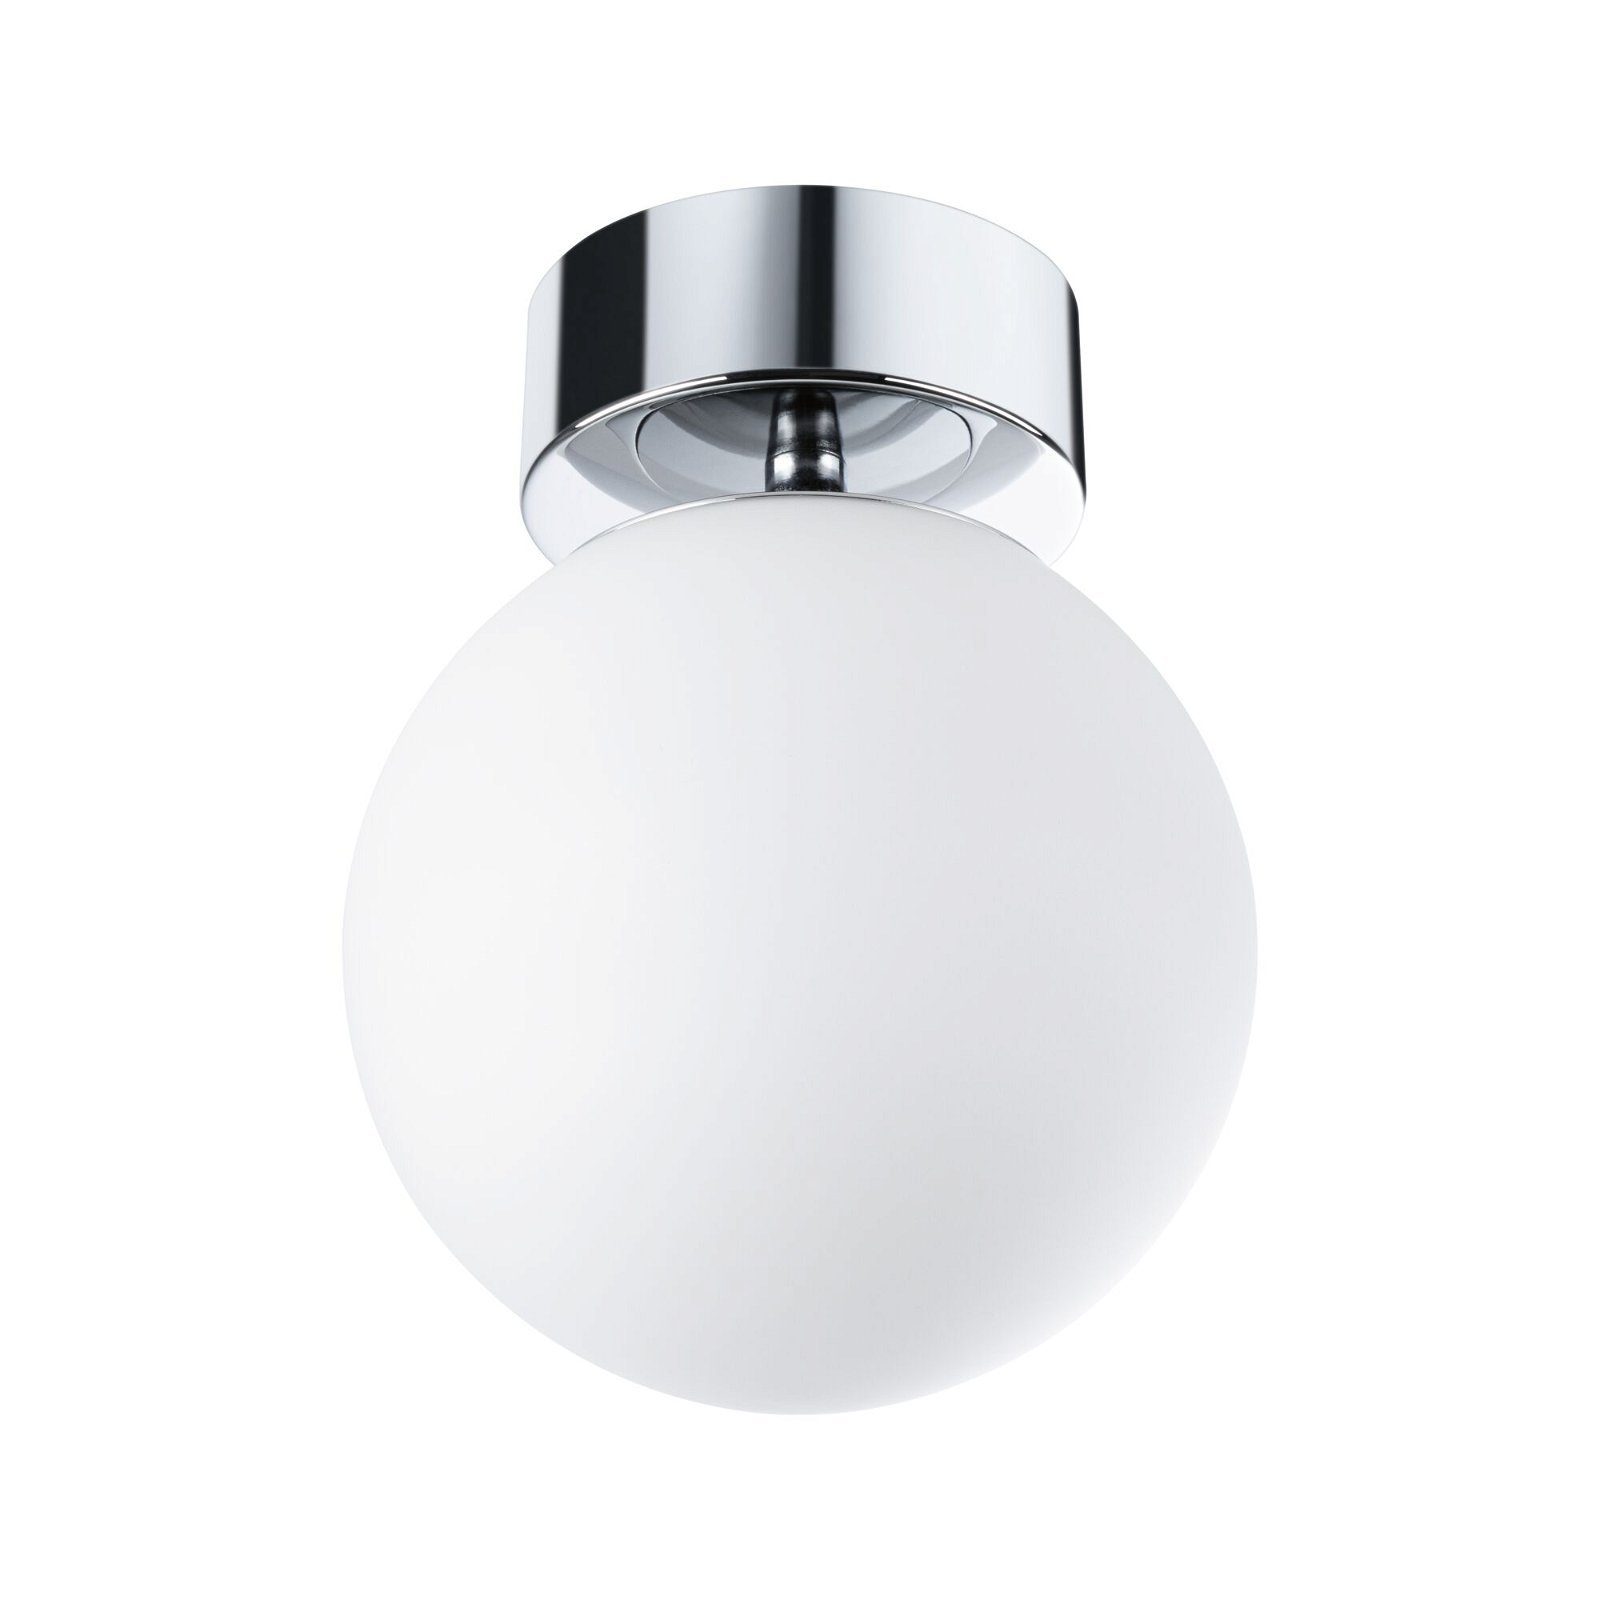 Paulmann LED Deckenleuchte Selection Bathroom Gove IP44 9W 3000K Satin/Chrom Glas/Metall, LED fest integriert, Warmweiß